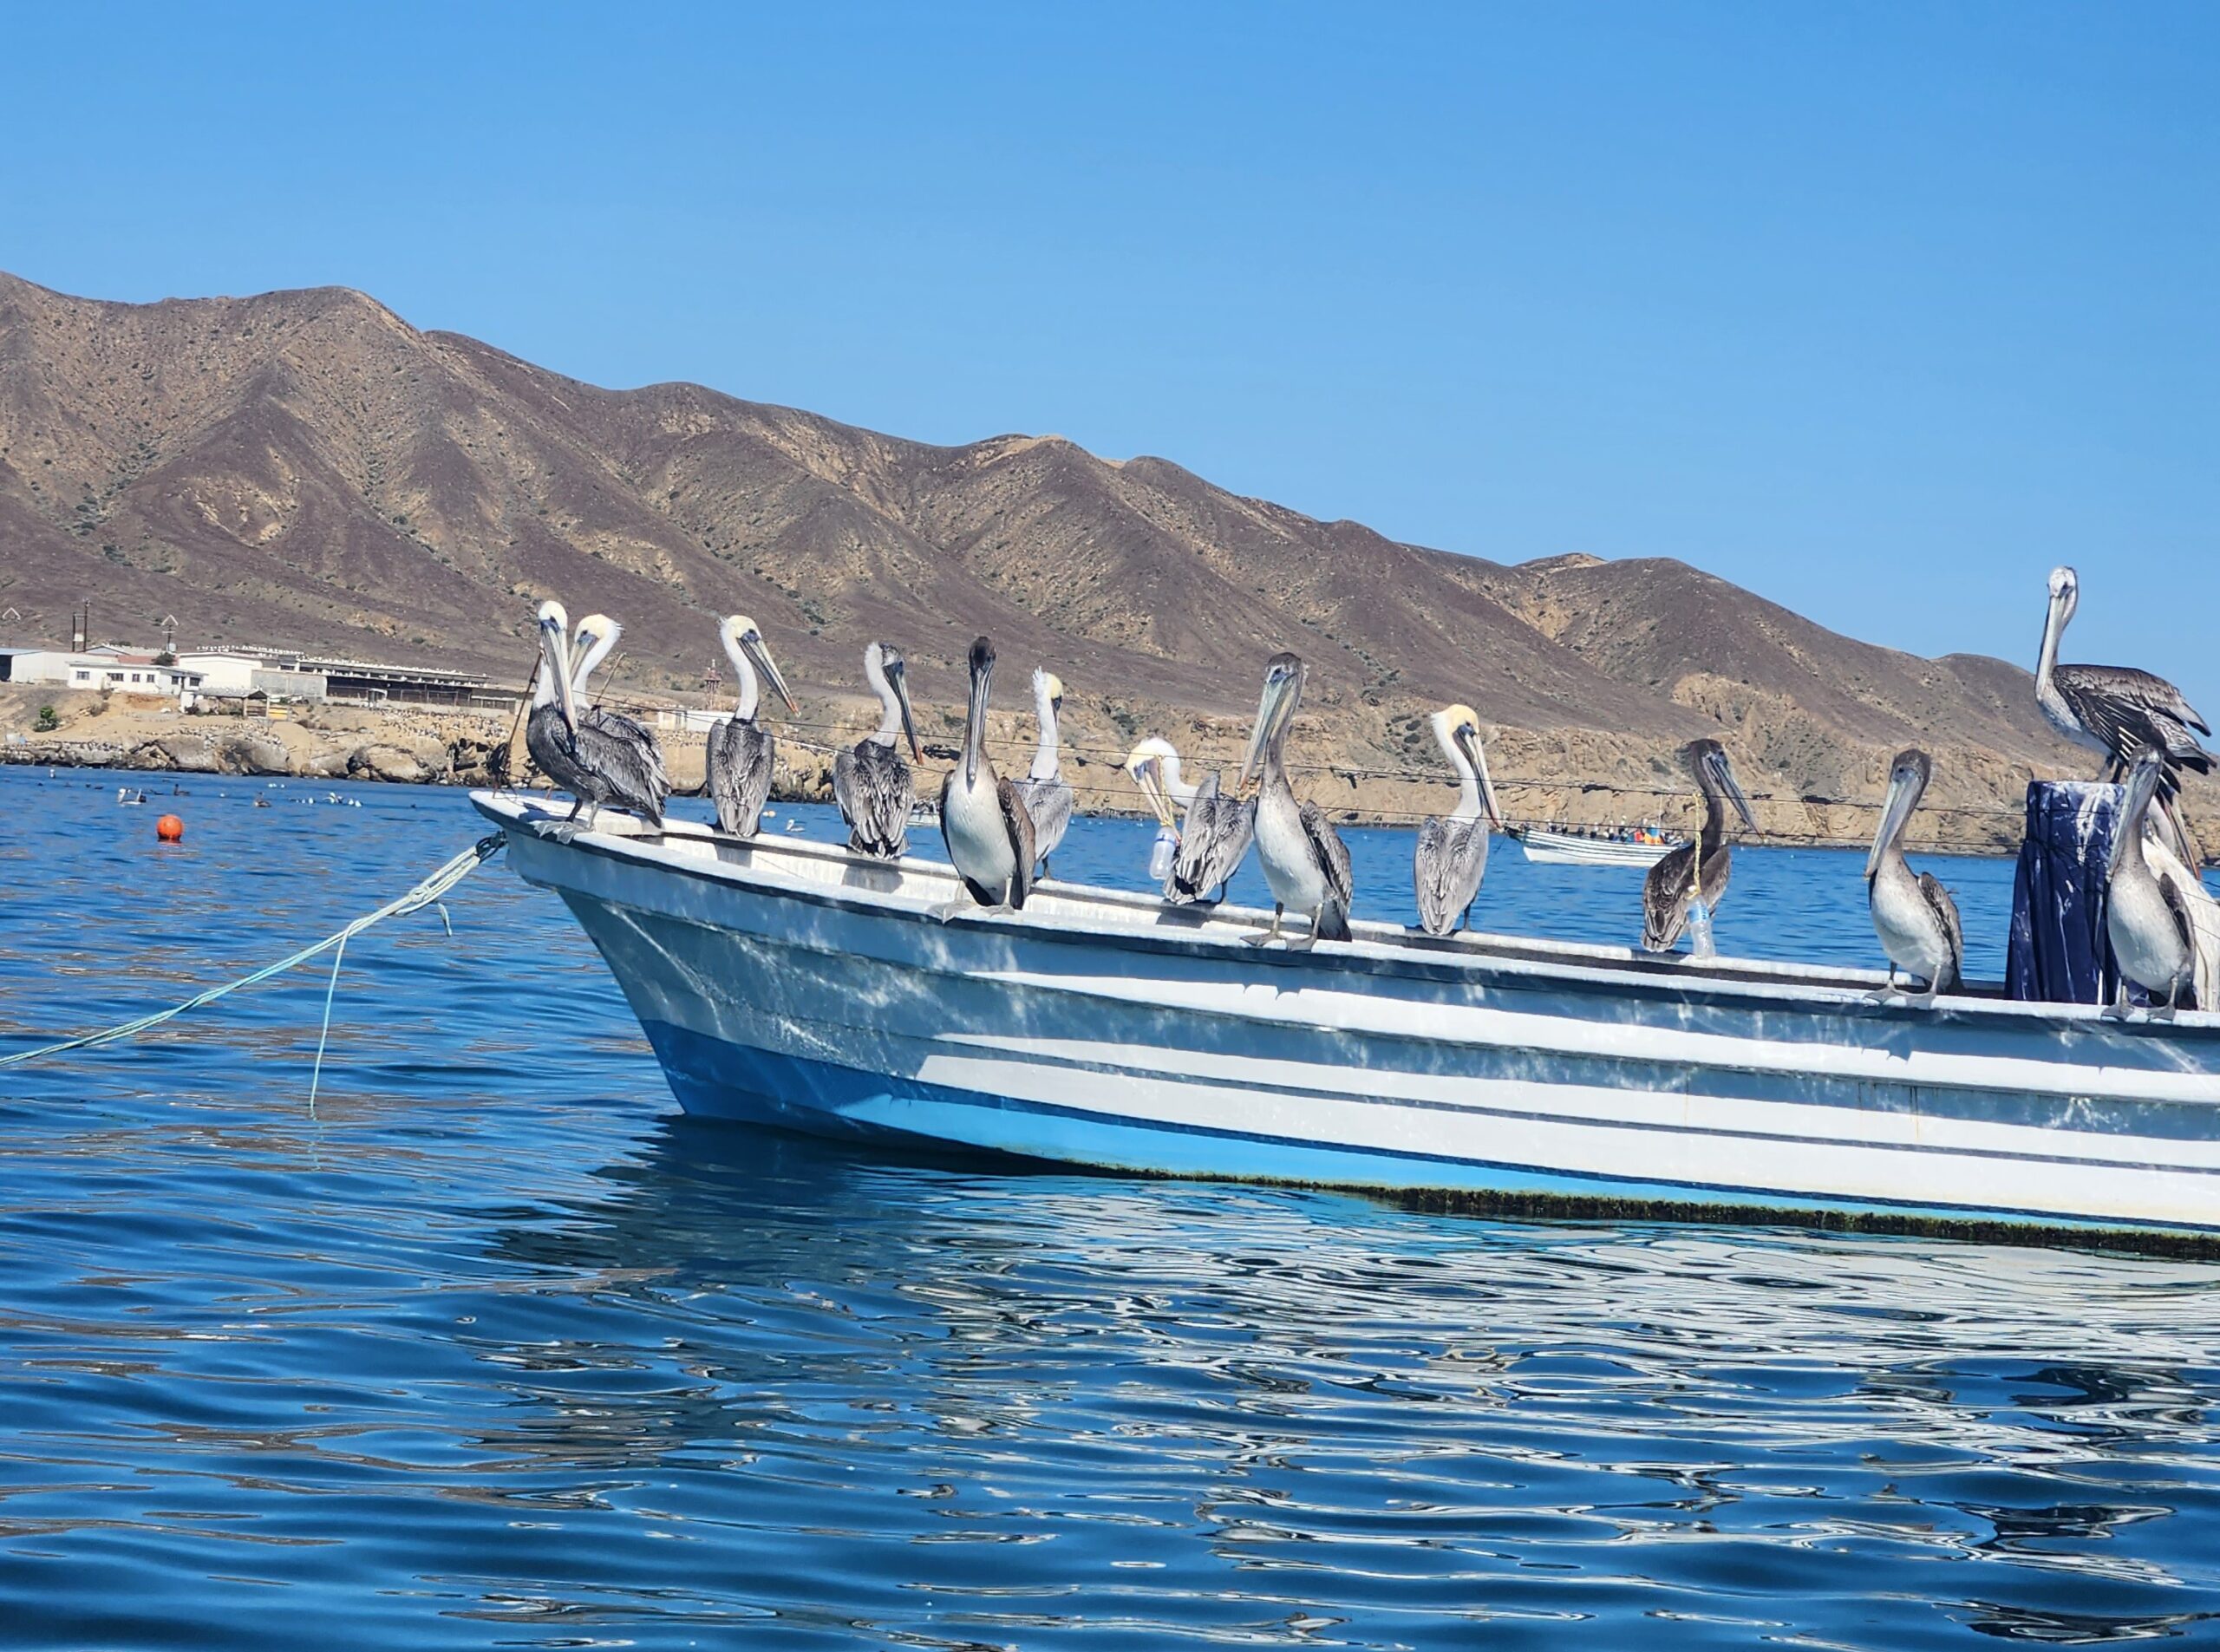 Bienvenidos a México! Sailing the Baja Peninsula